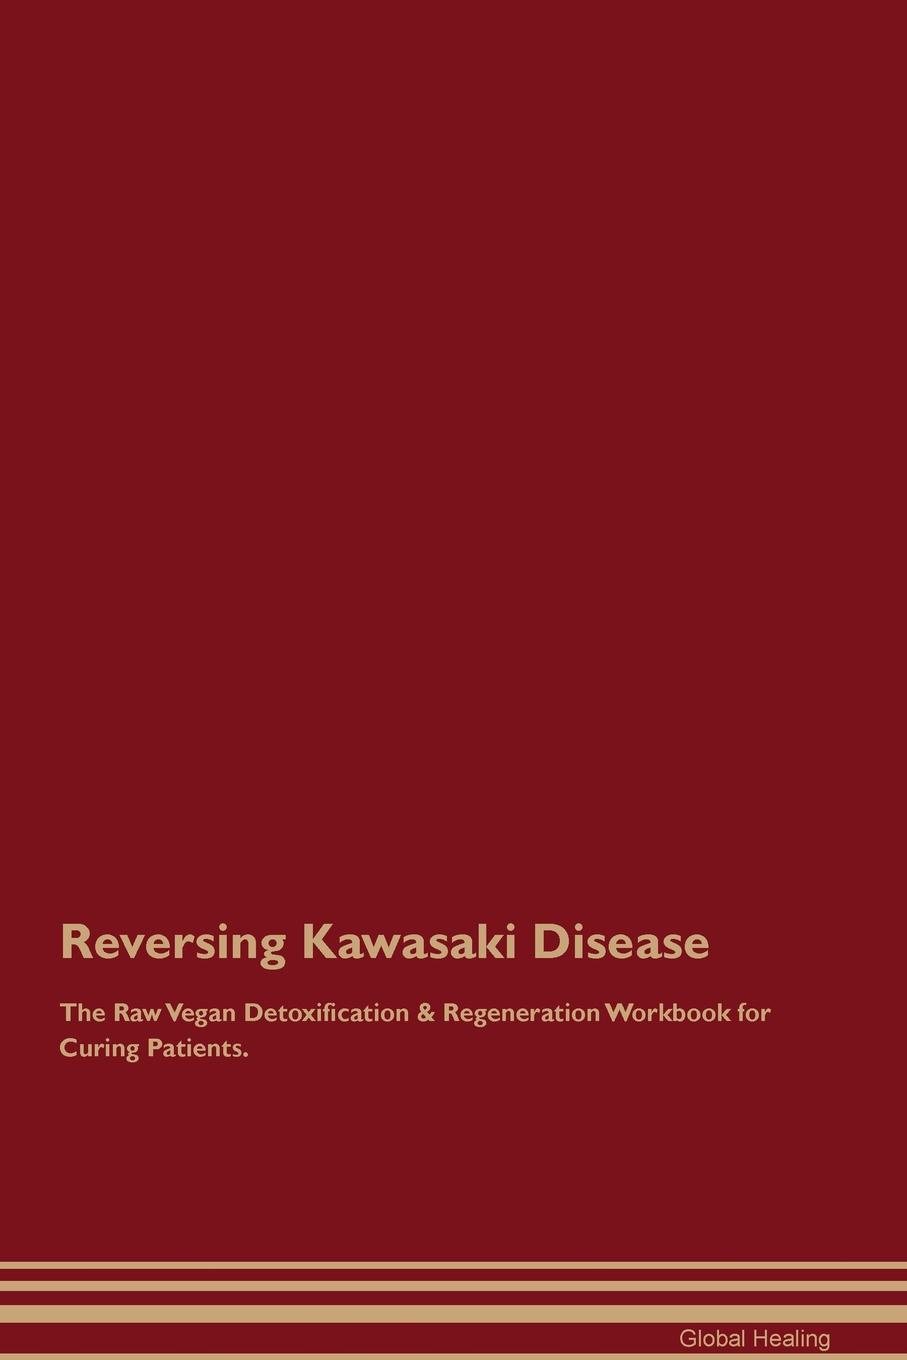 Reversing Kawasaki Disease The Raw Vegan Detoxification & Regeneration Workbook for Curing Patients